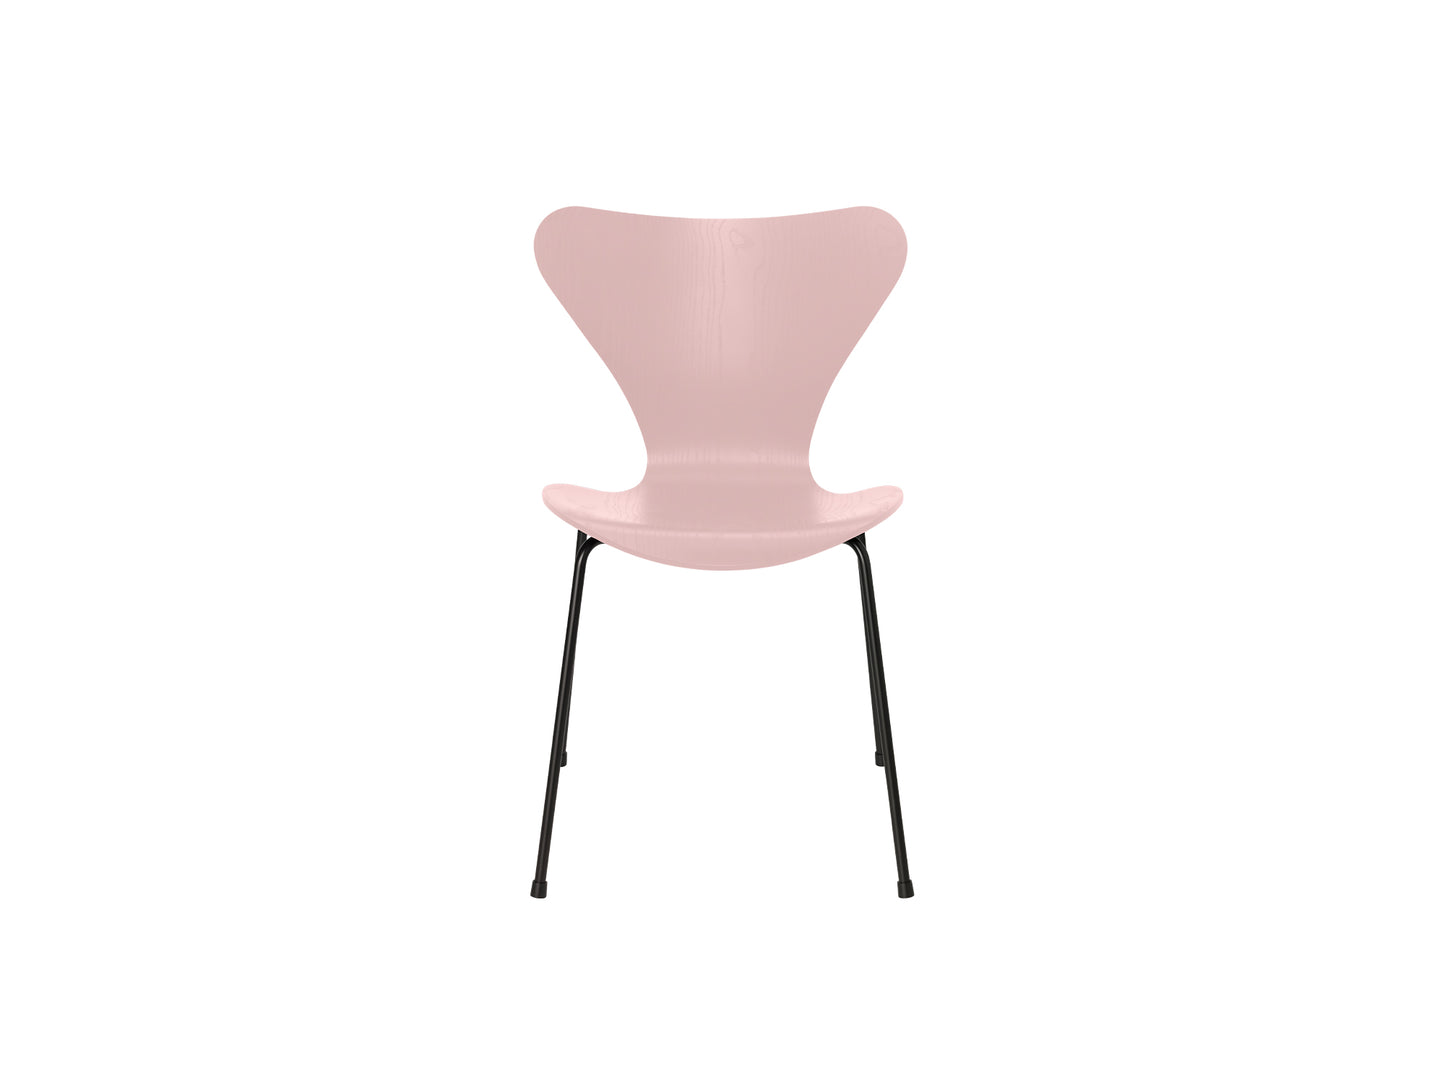 Series 7™ 3107 Dining Chair by Fritz Hansen - Pale Rose Coloured Ash Veneer Shell / Black Steel